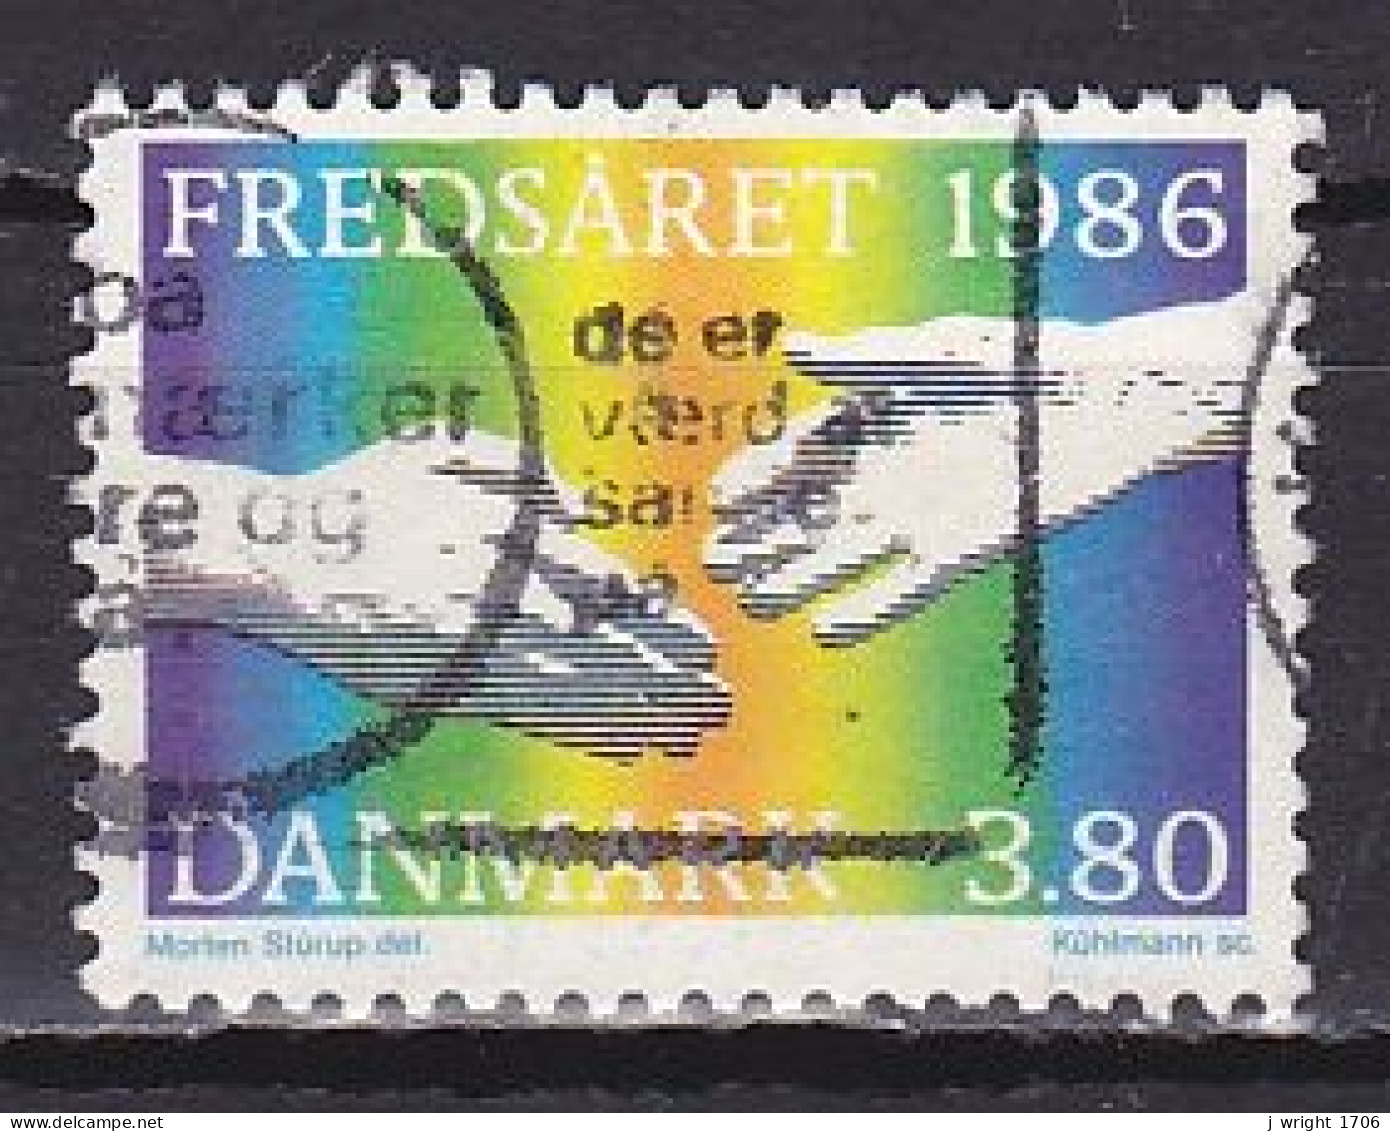 Denmark, 1986, International Peace Year, 3.80kr, USED - Gebruikt